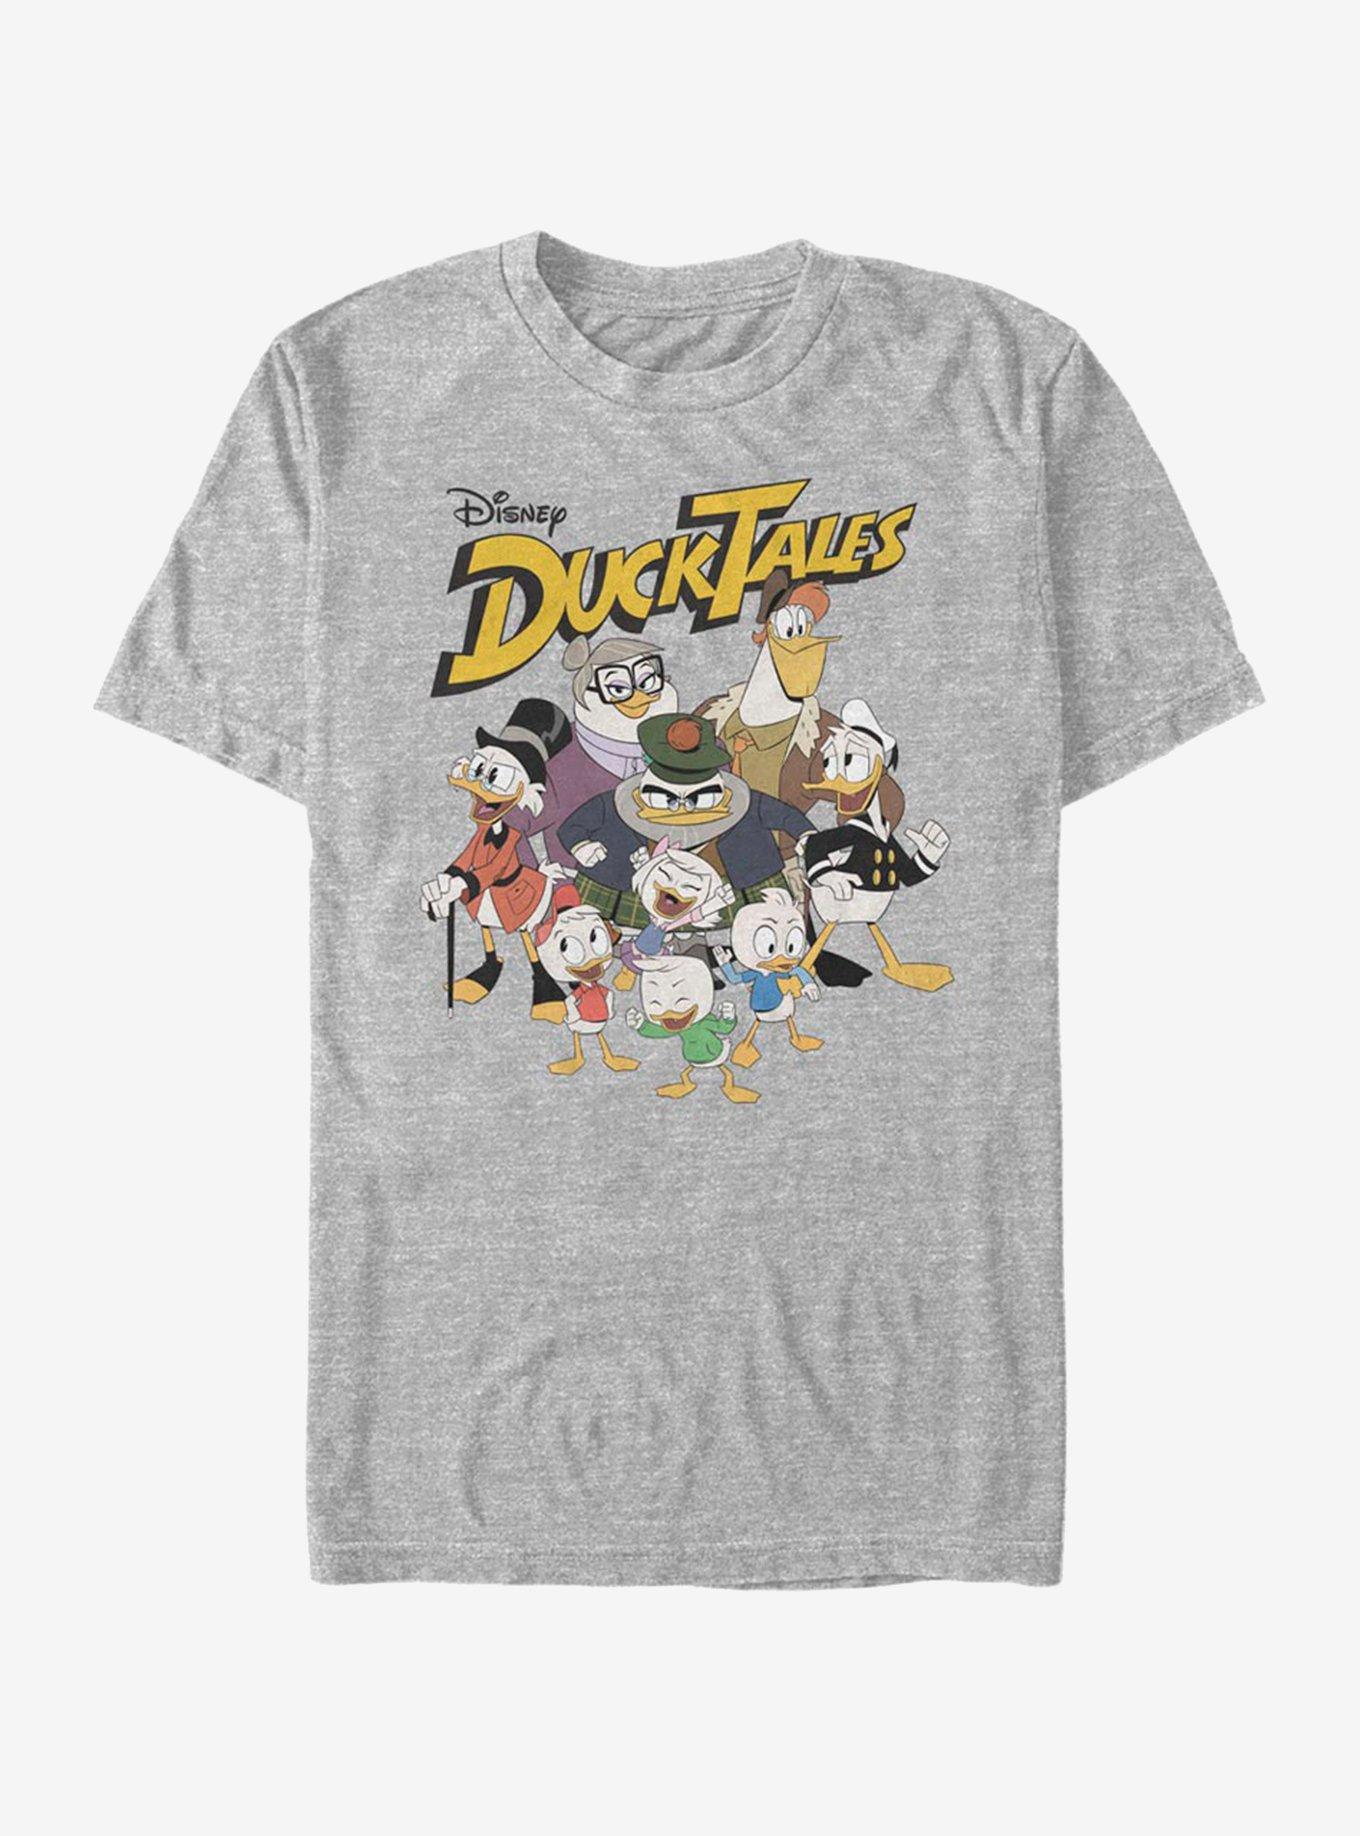 Disney Ducktales Group T-Shirt - GREY | Hot Topic